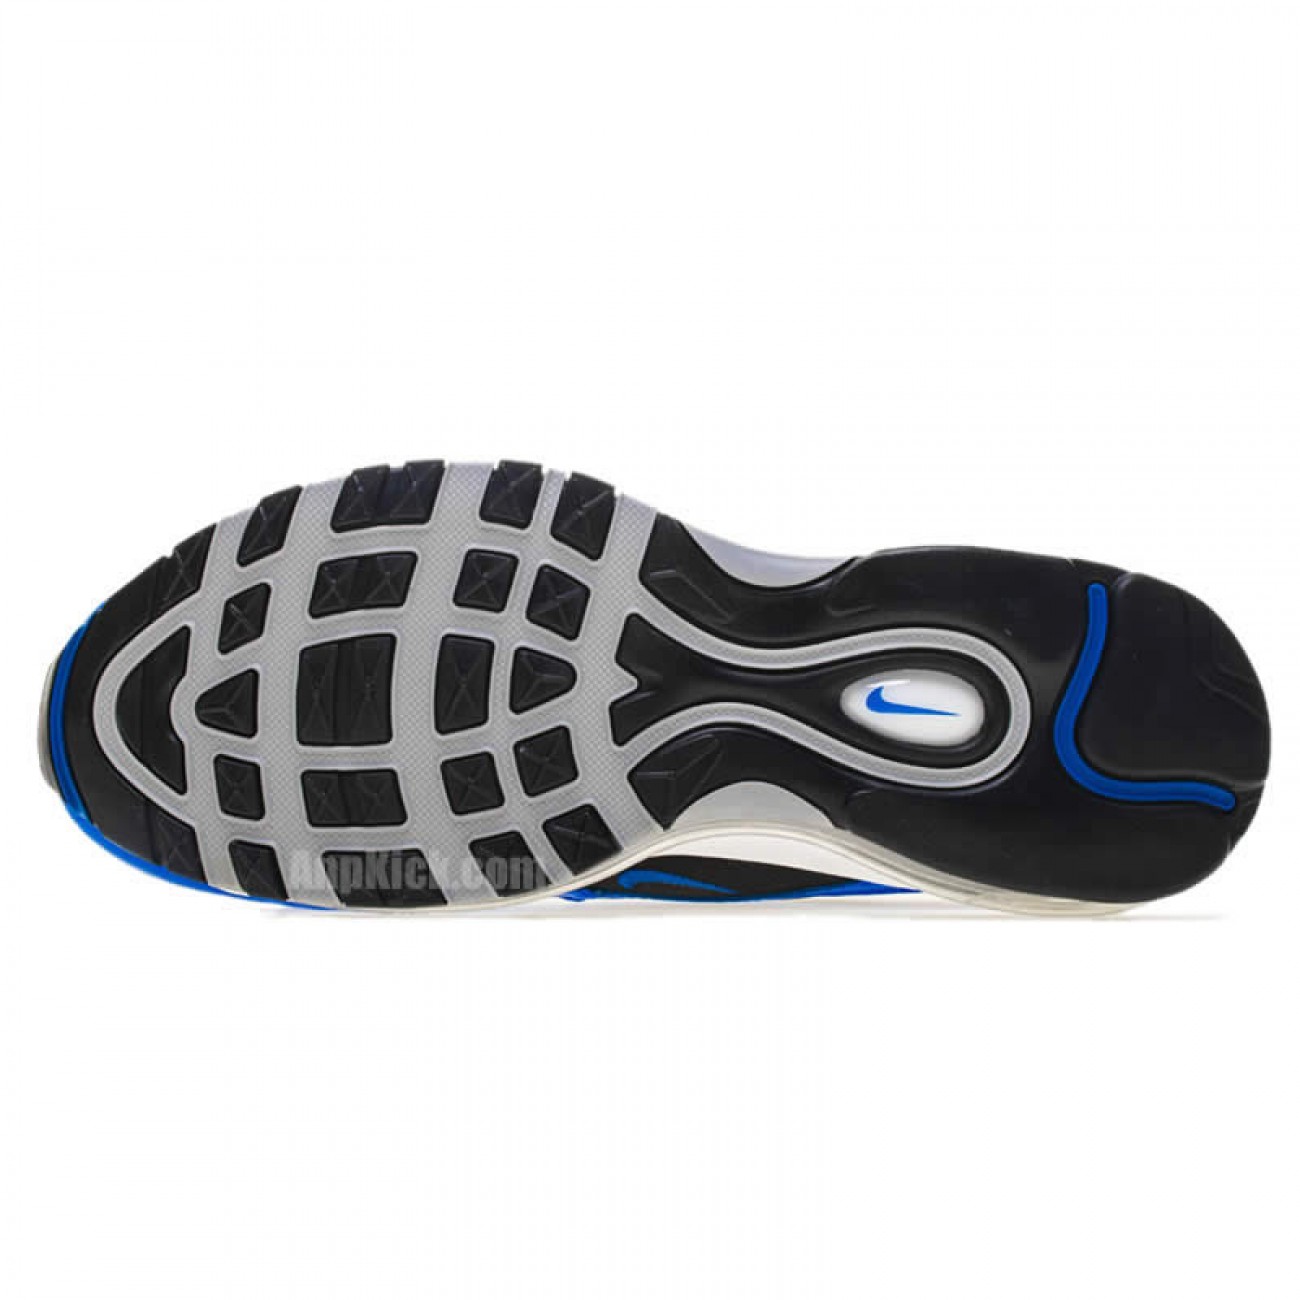 Nike Air Max 97 Blue/Black Bullet 97s Shoes 921826-011